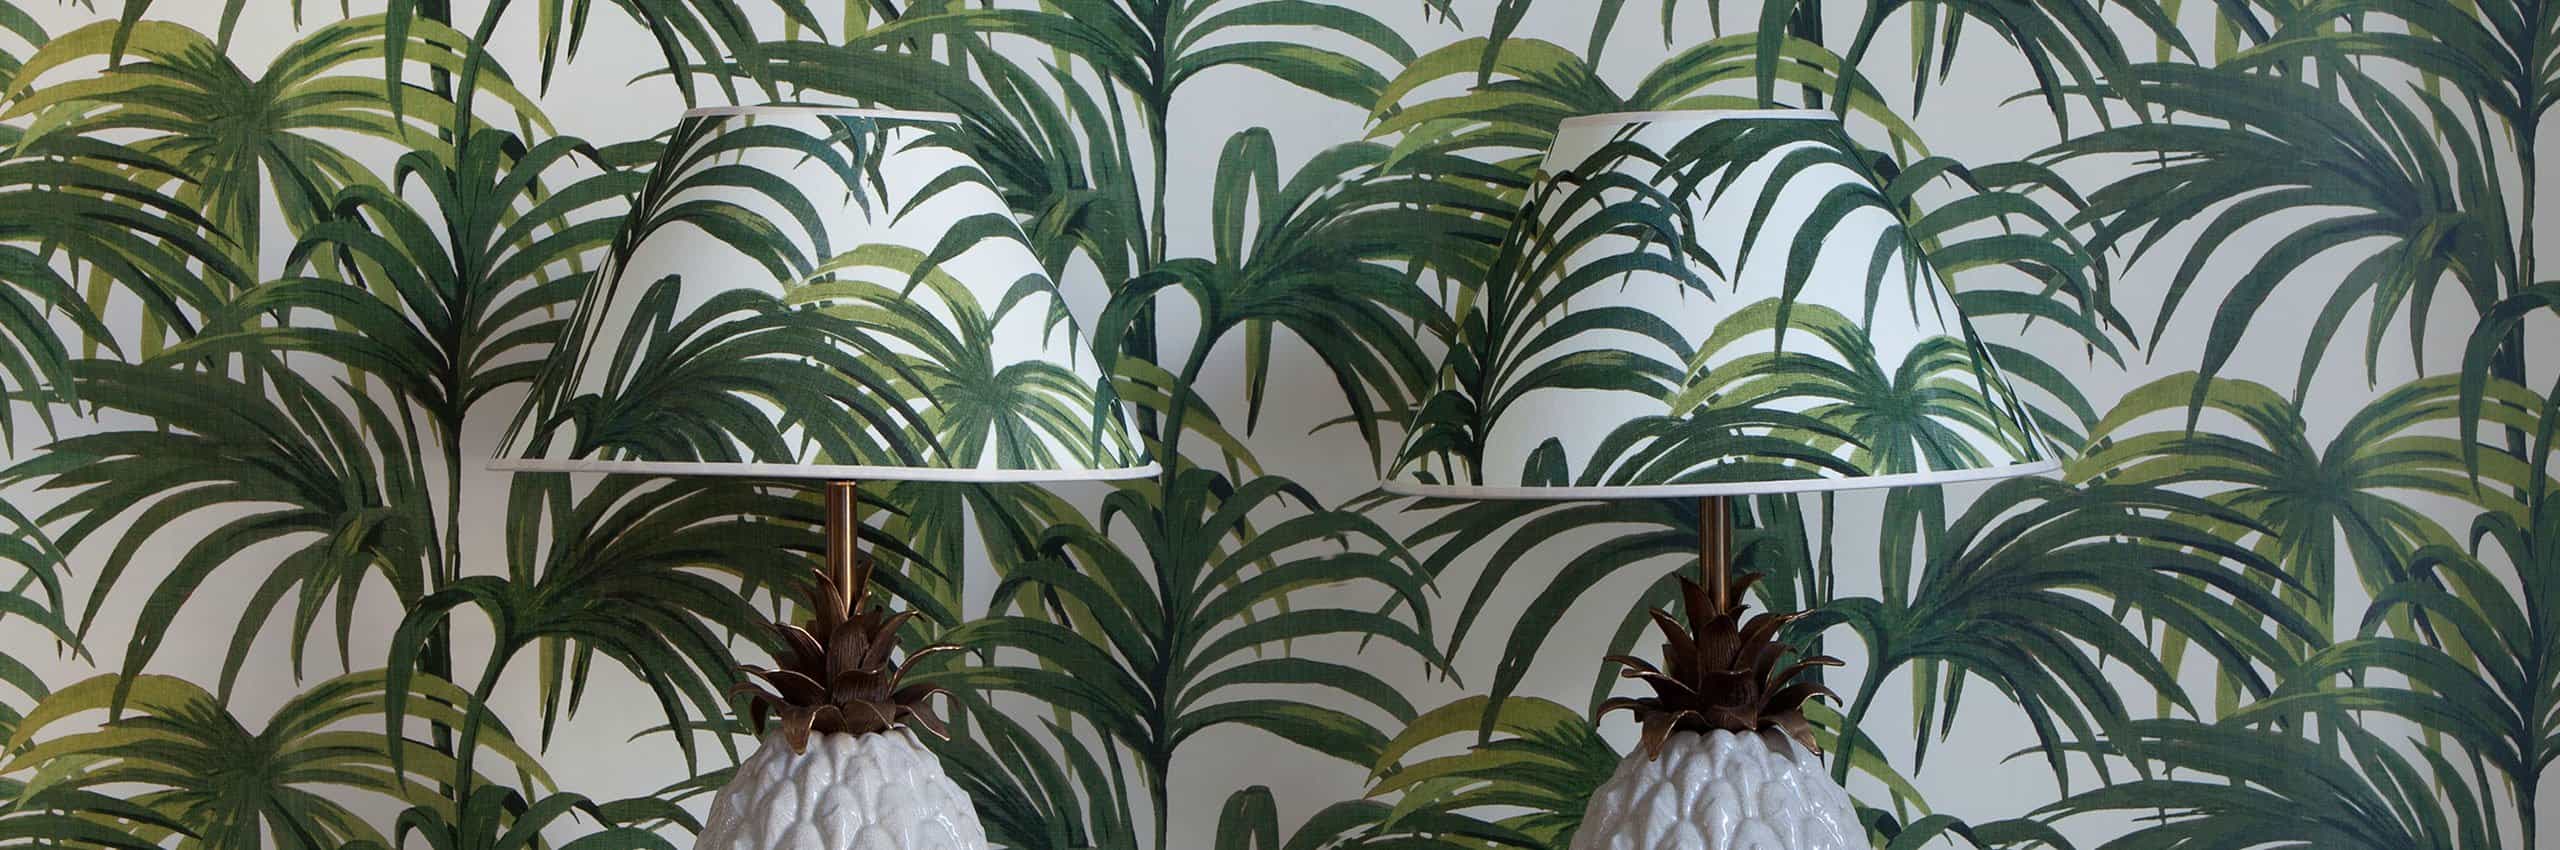 jungle wallpaper uk,pianta,pianta della casa,fiore,pianta fiorita,palma